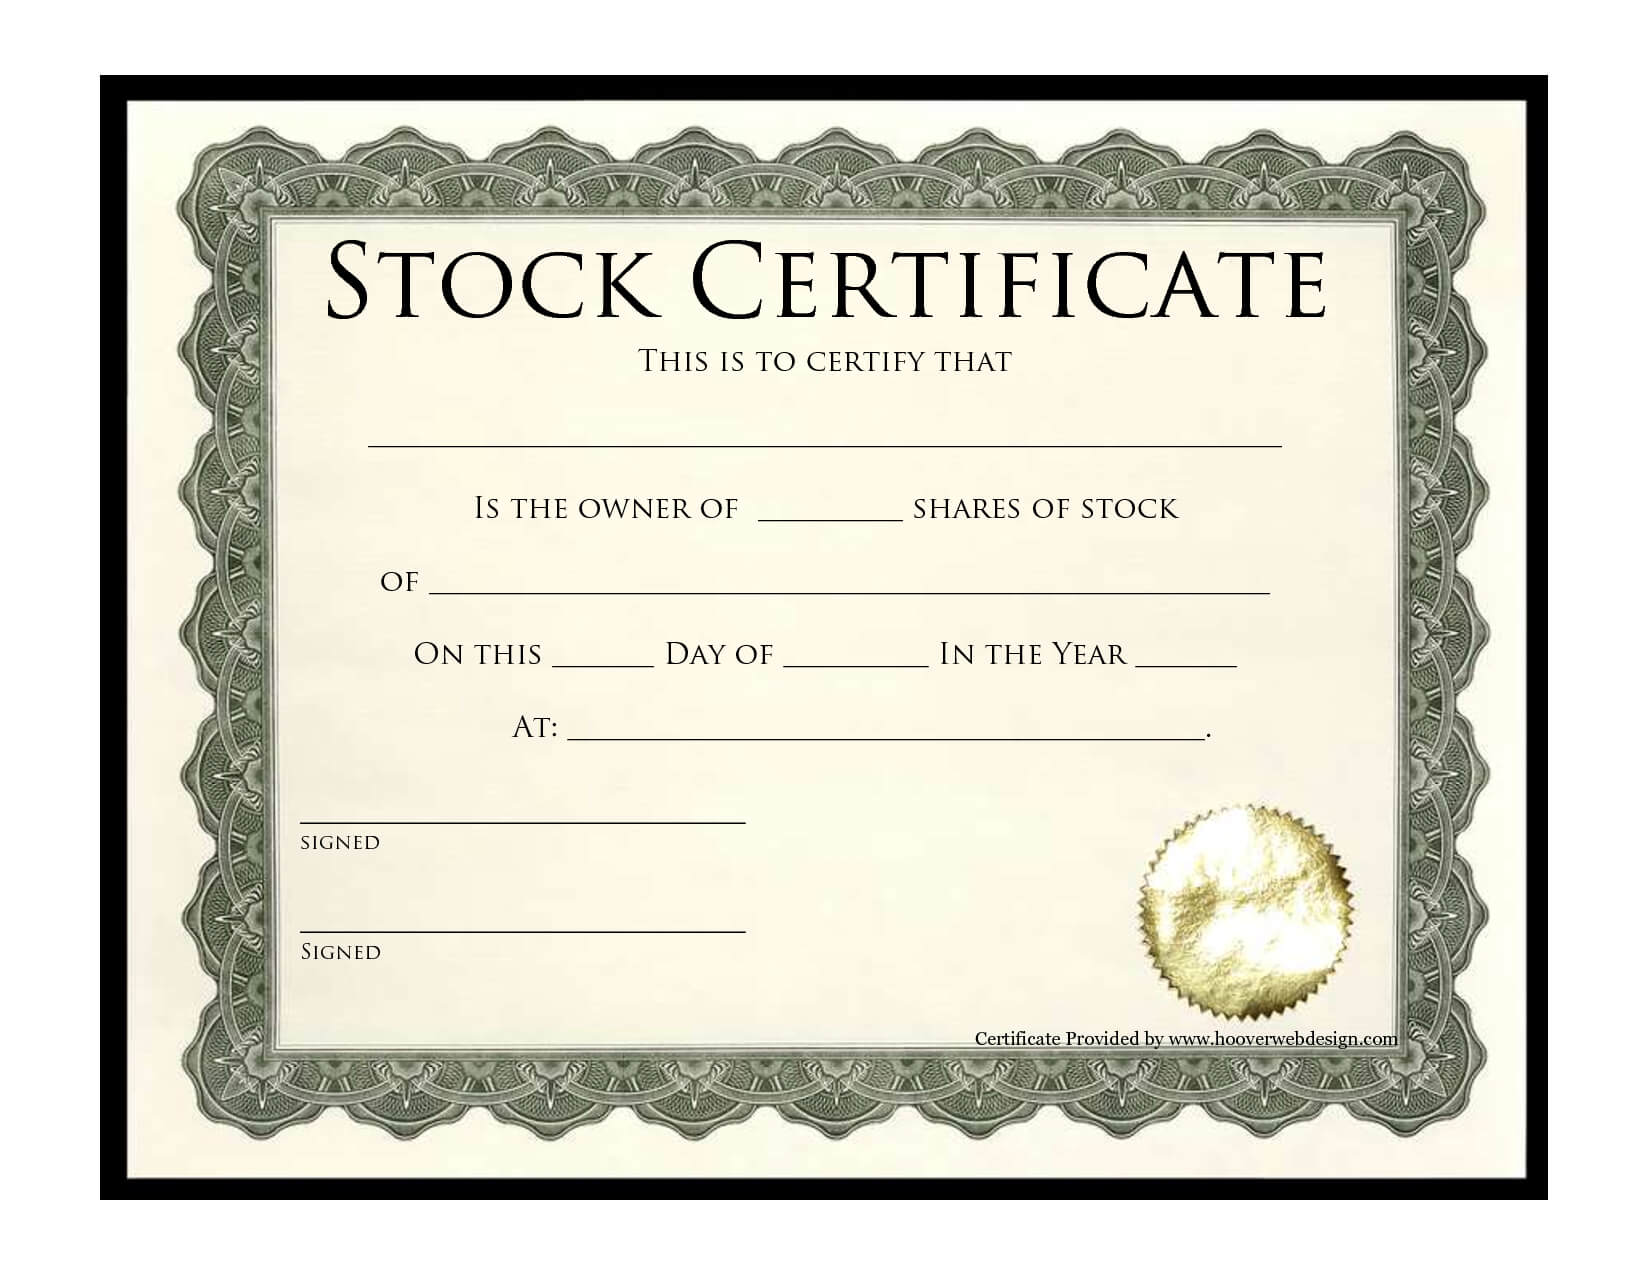 Stock Certificate Template | Best Template Collection Regarding Corporate Share Certificate Template